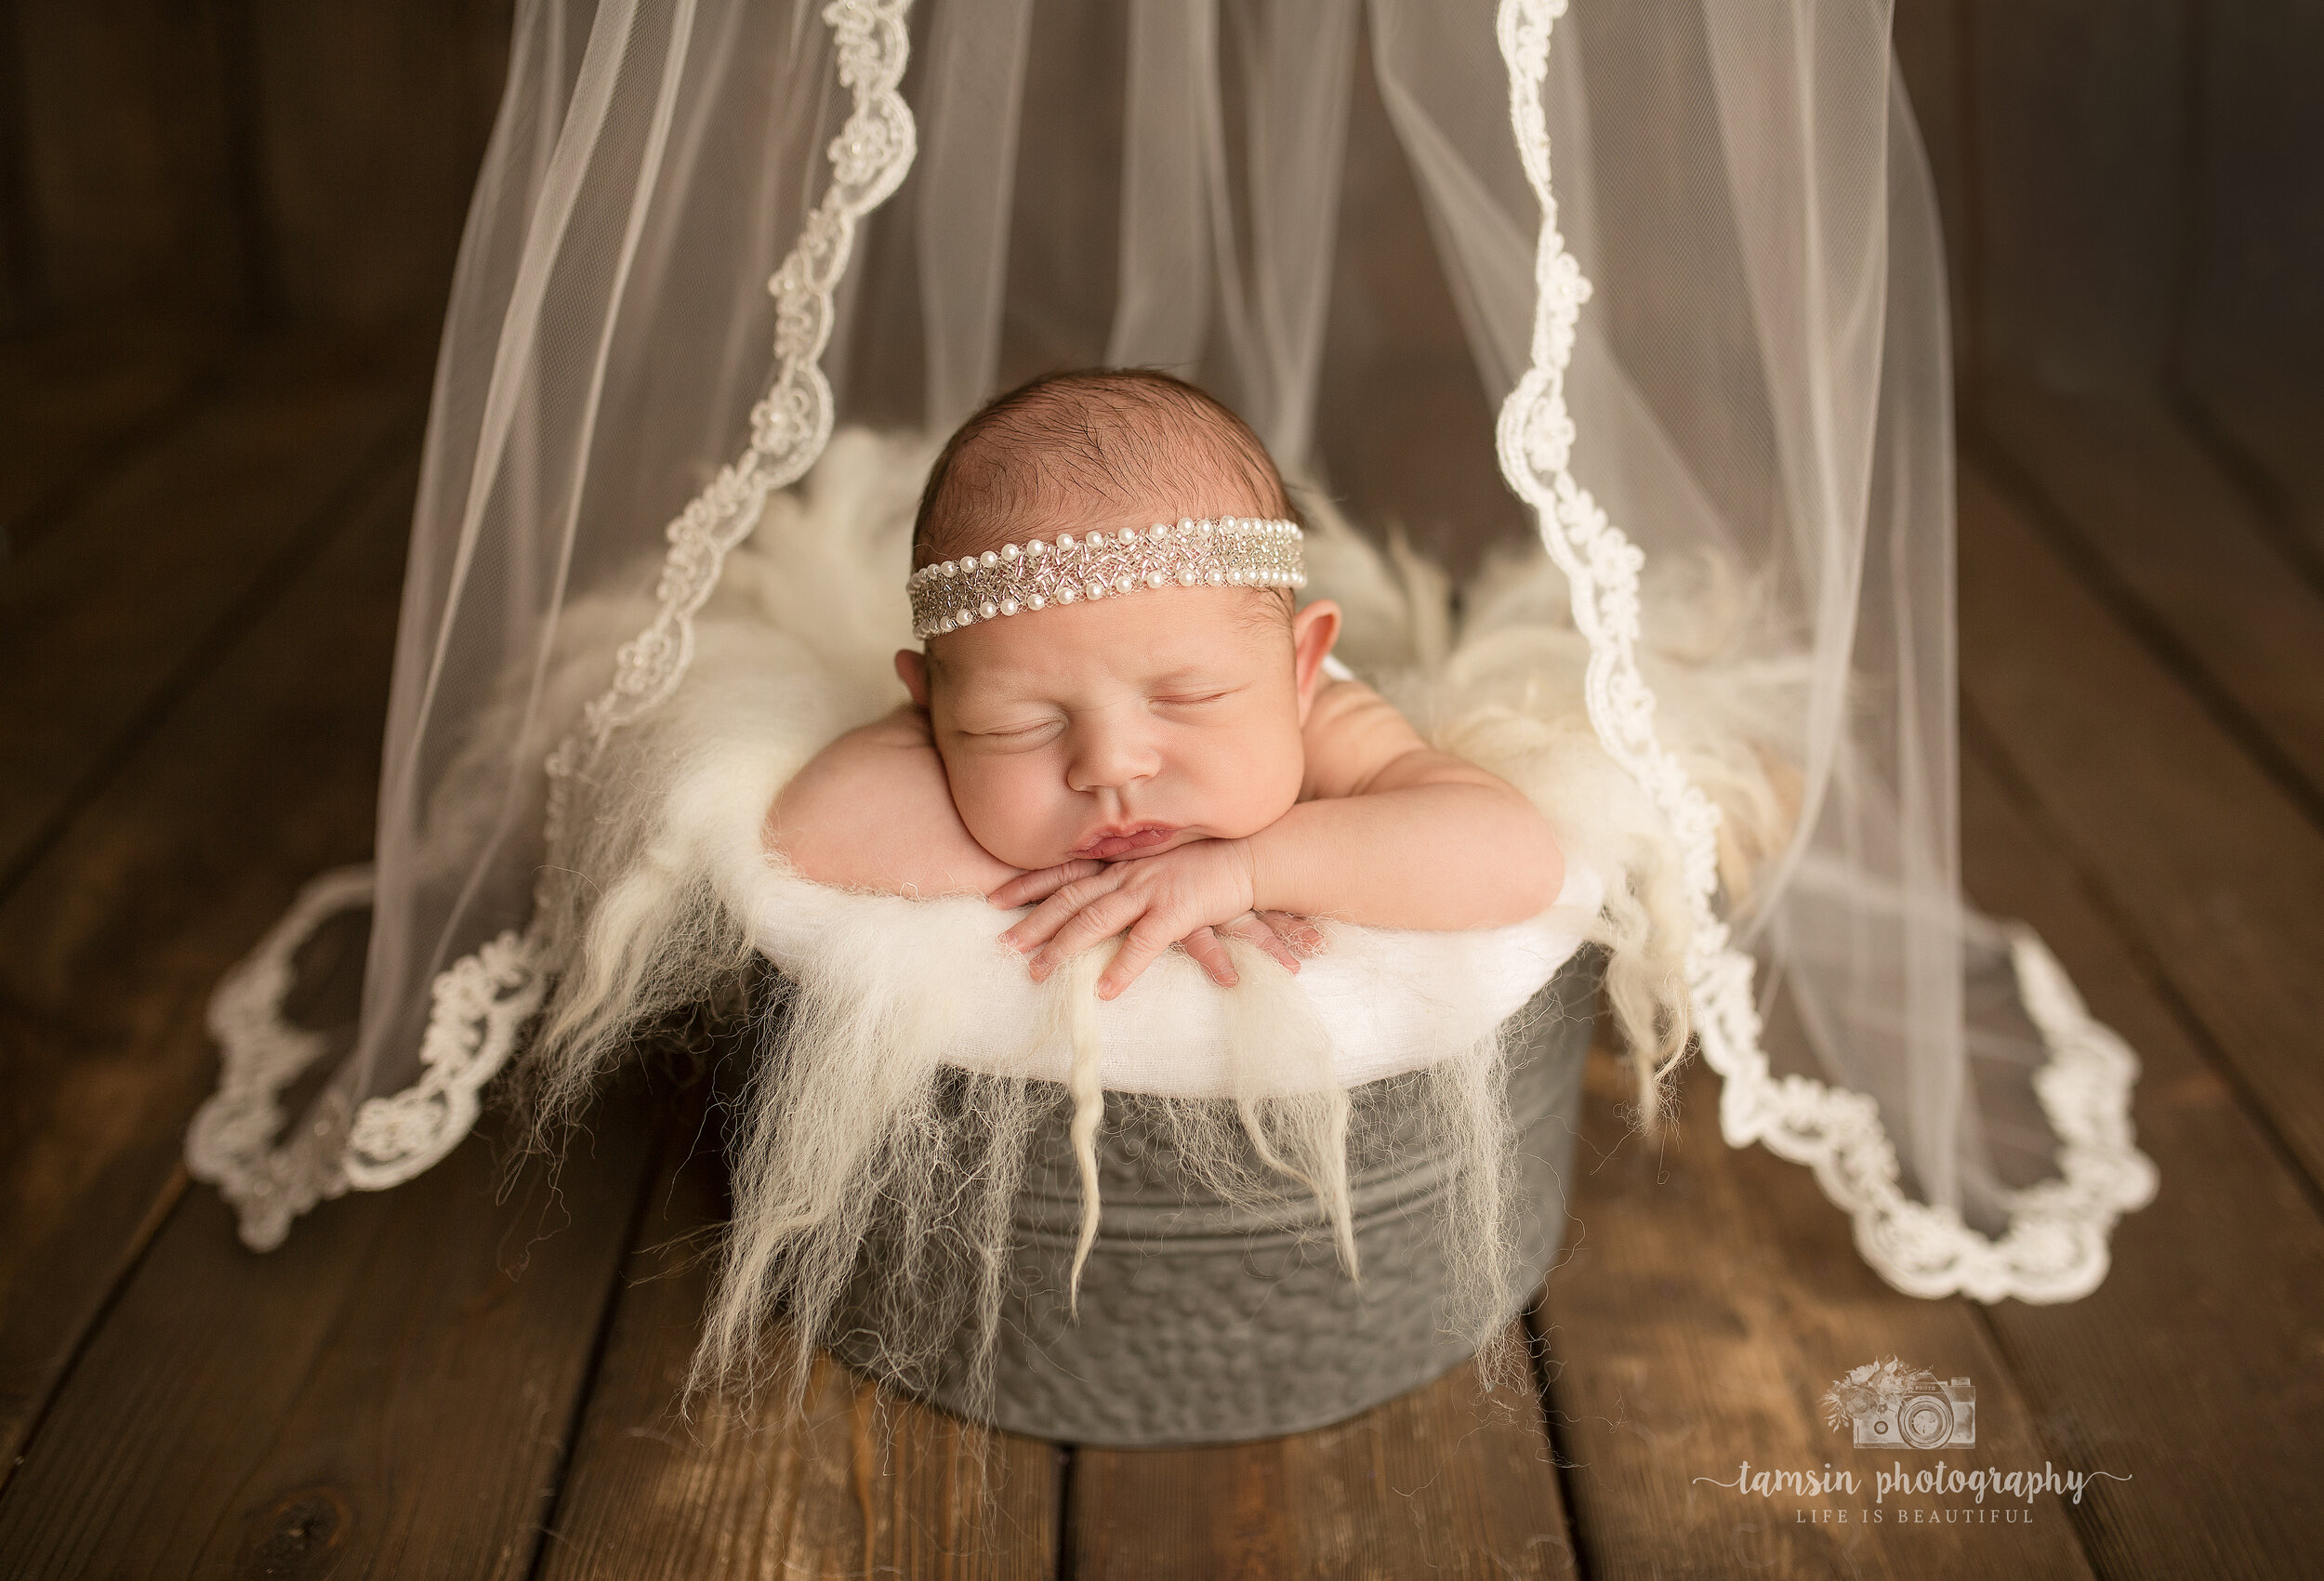 Newborn Posed Wedding Veil.jpg